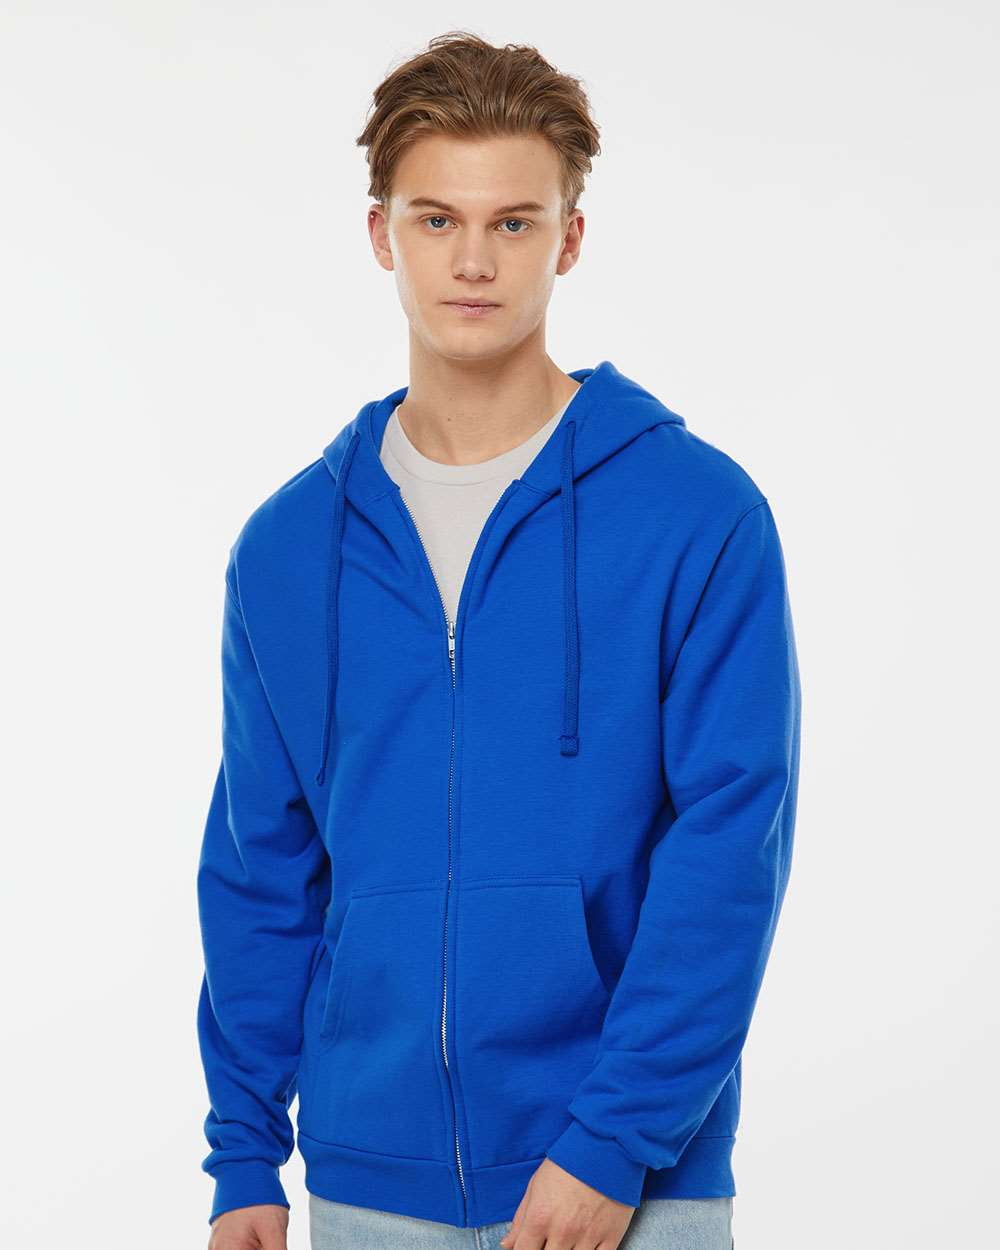 Tultex Unisex Full-Zip Hooded Sweatshirt - Walmart.com